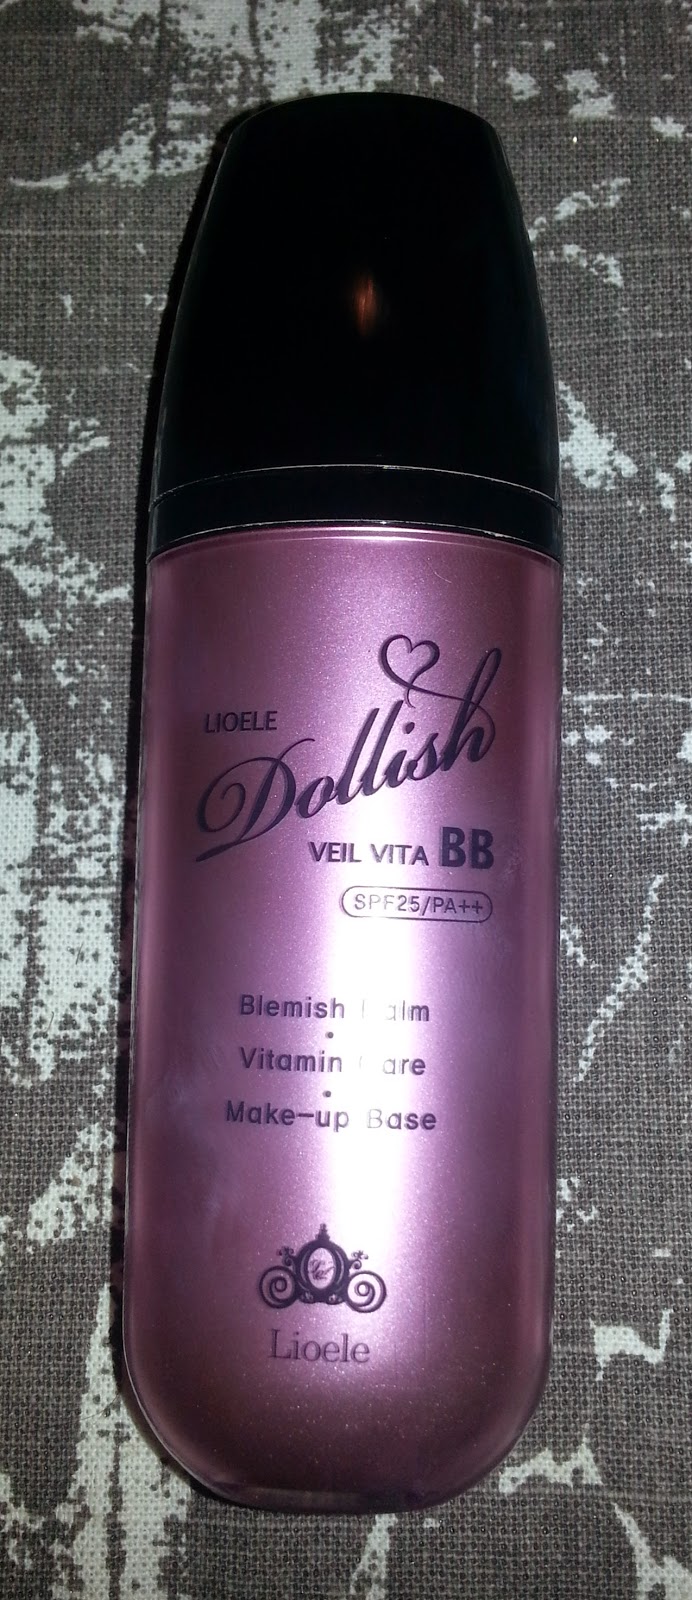 Liole Dollish Veil Vita BB Cream in Gorgeous Purple